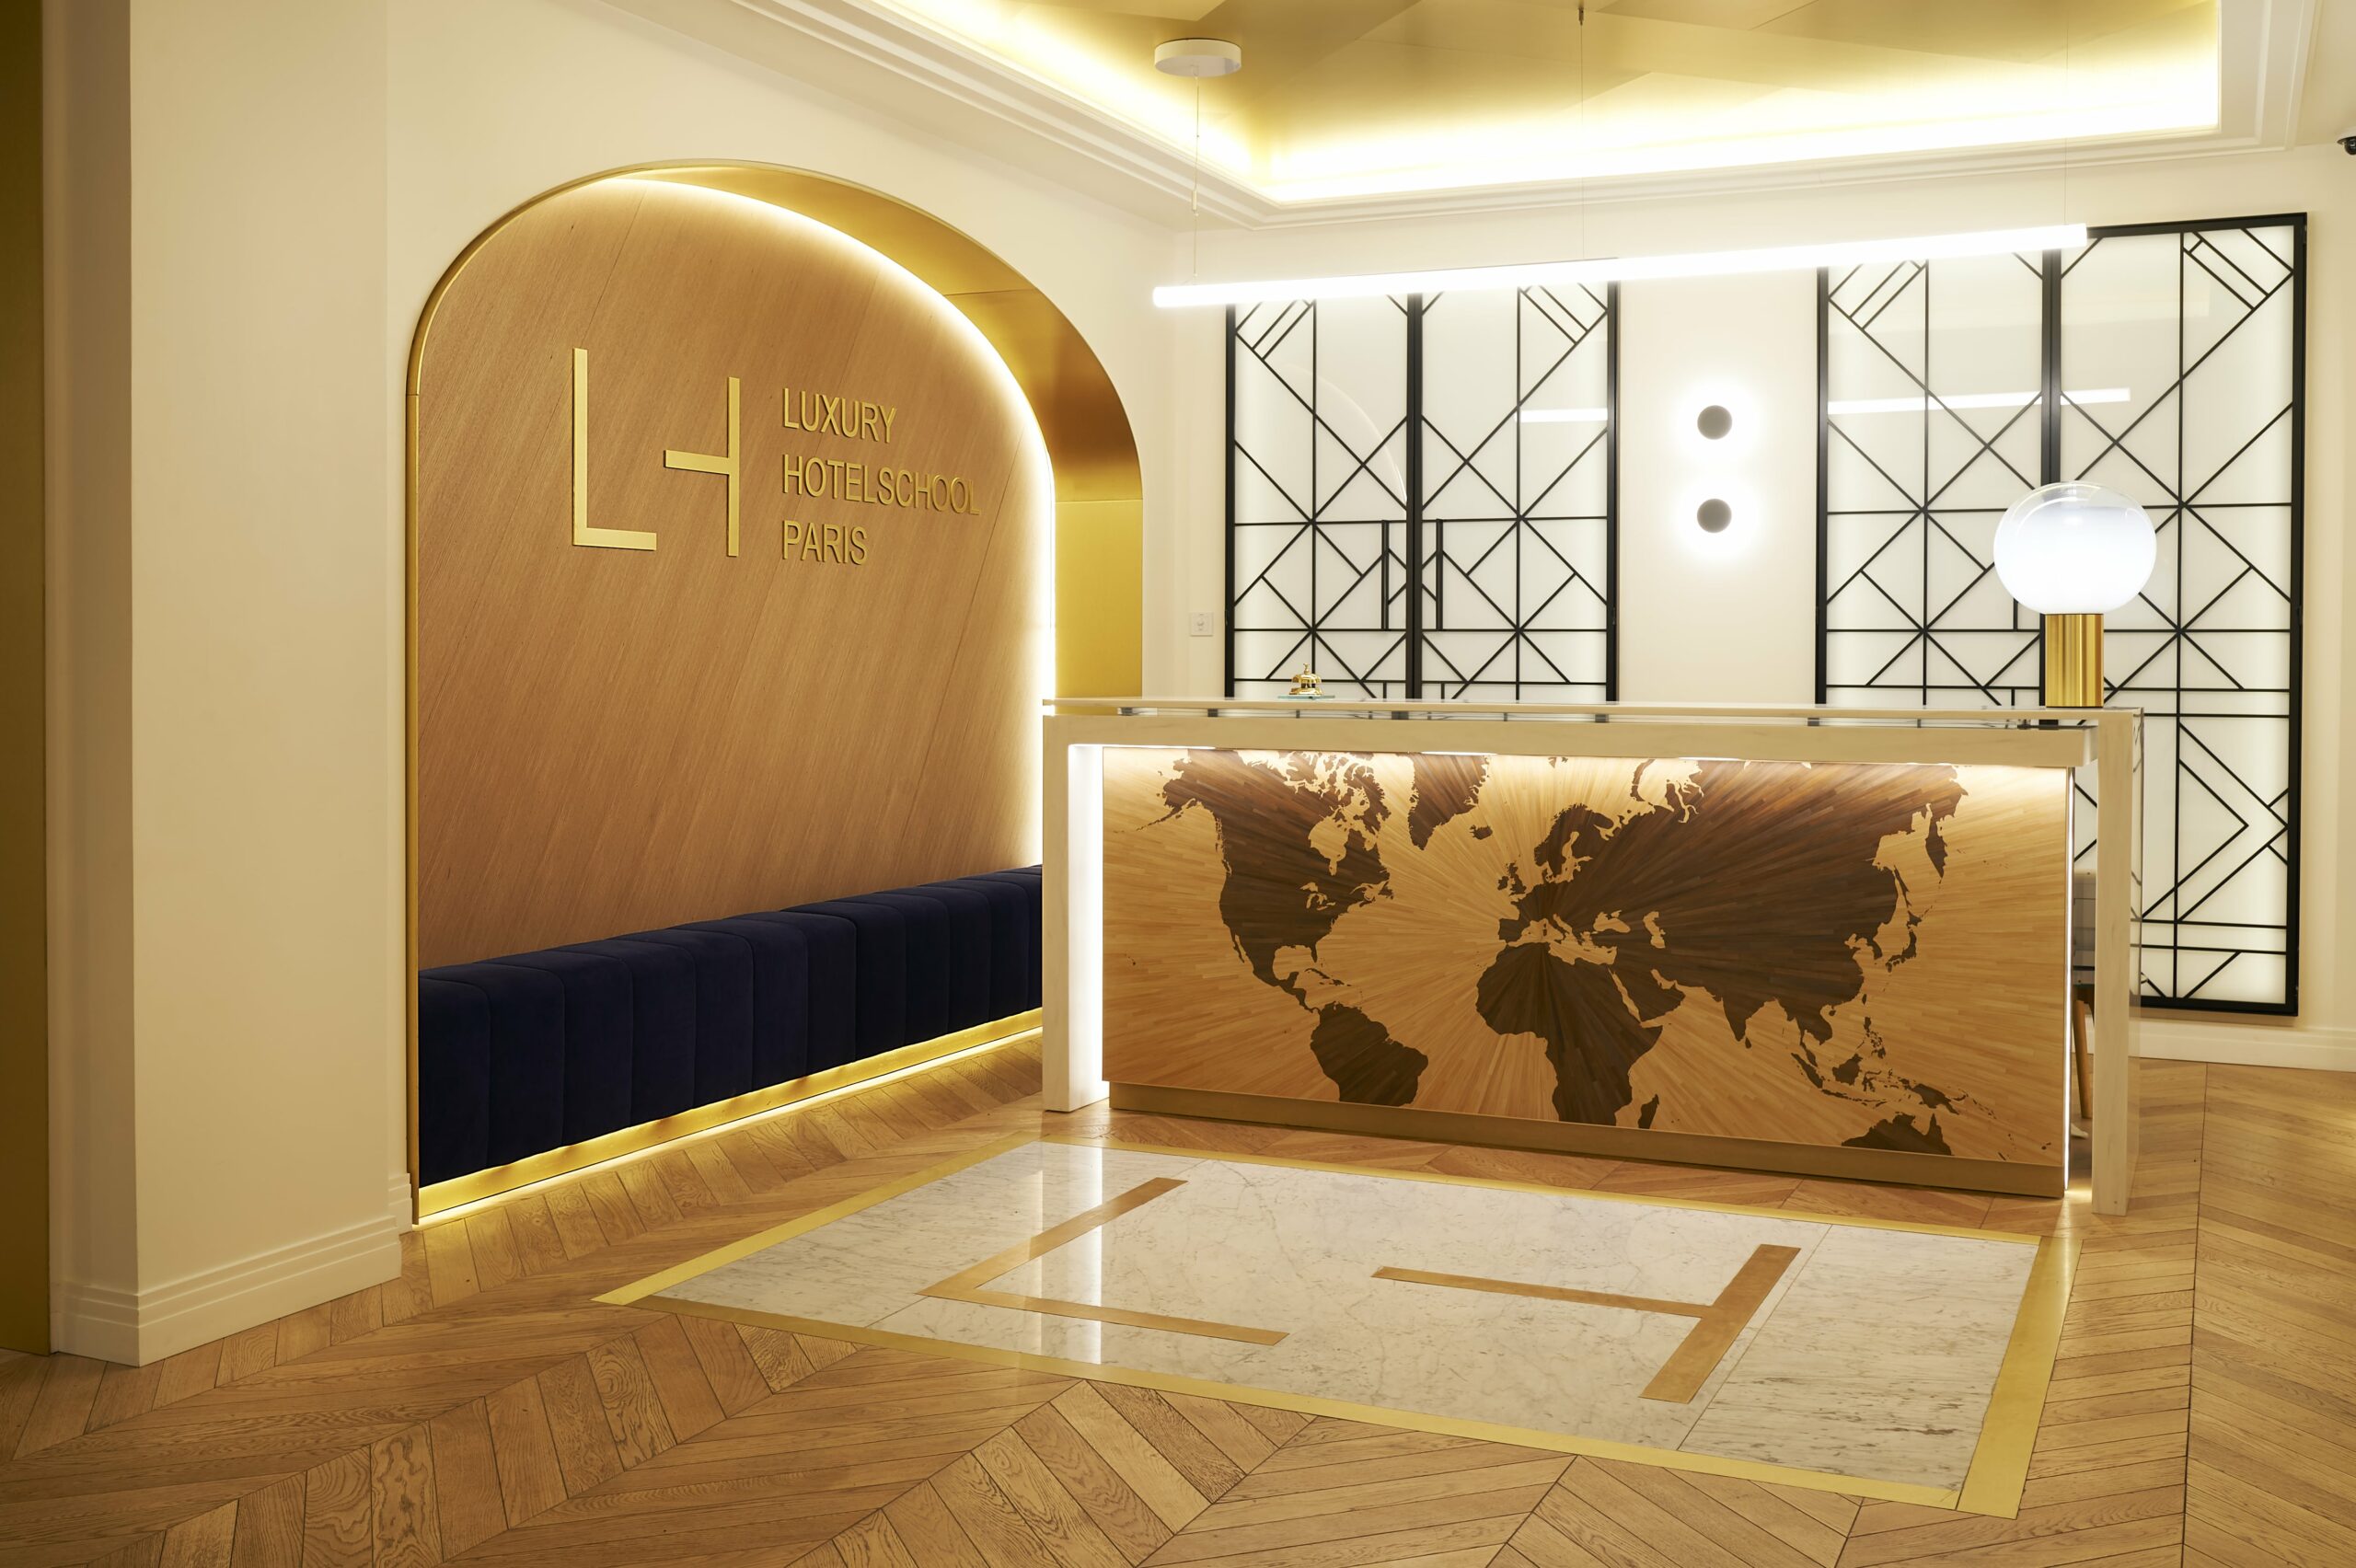 Hall d'accueil de la Luxury Hotel School - Luxury Hotelschool